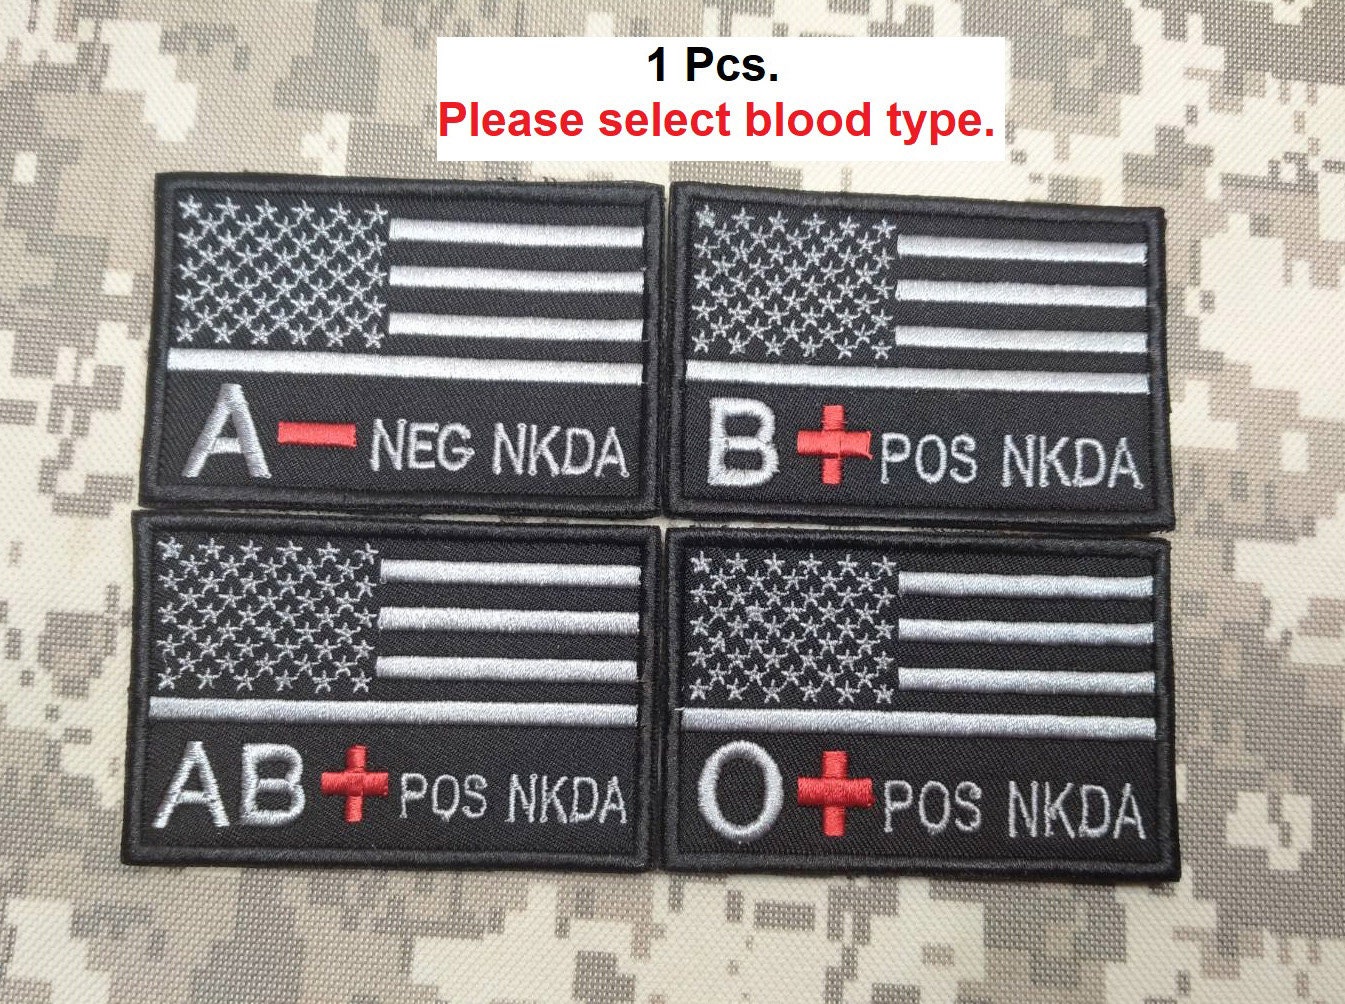 HOMEMAXS 2pcs B Positive Blood Type Patch Camouflage Reflective Blood Type  Badges 